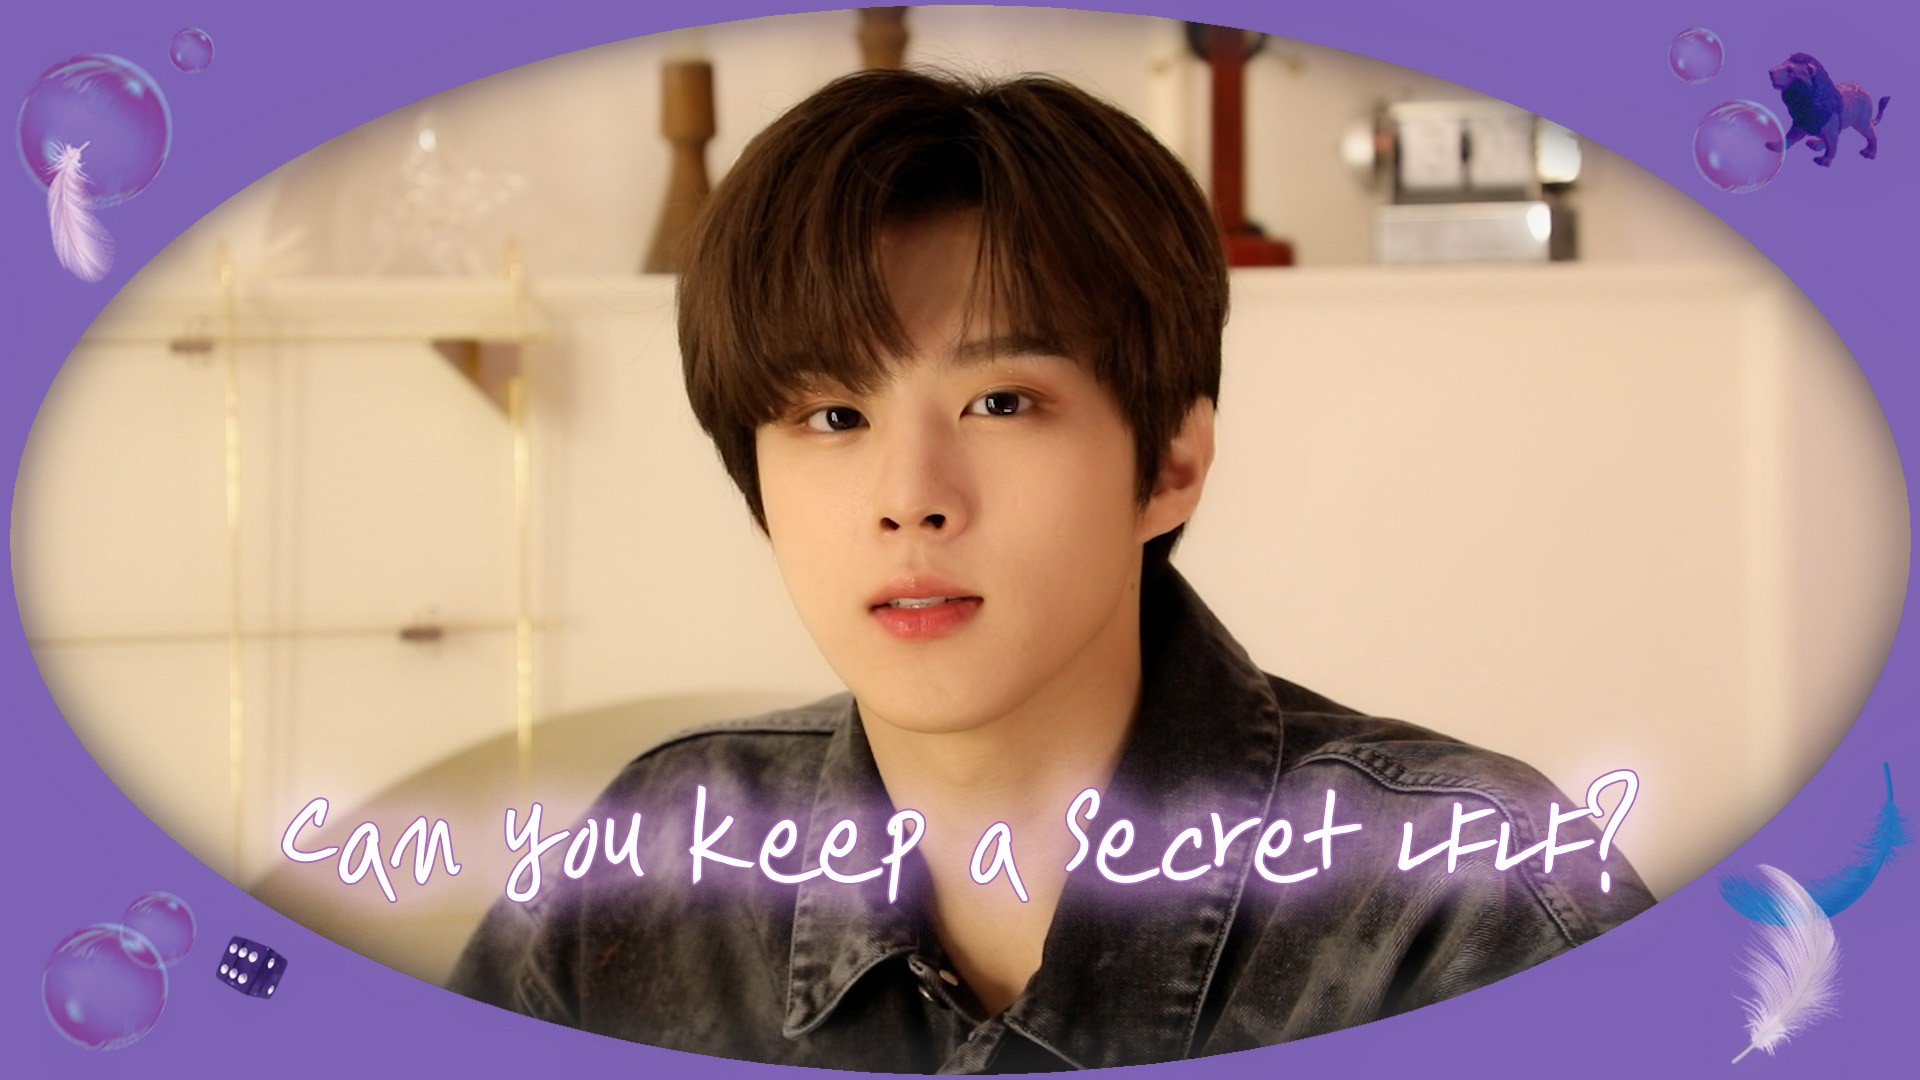 [WWW:] Can you keep a secret 냐냐?